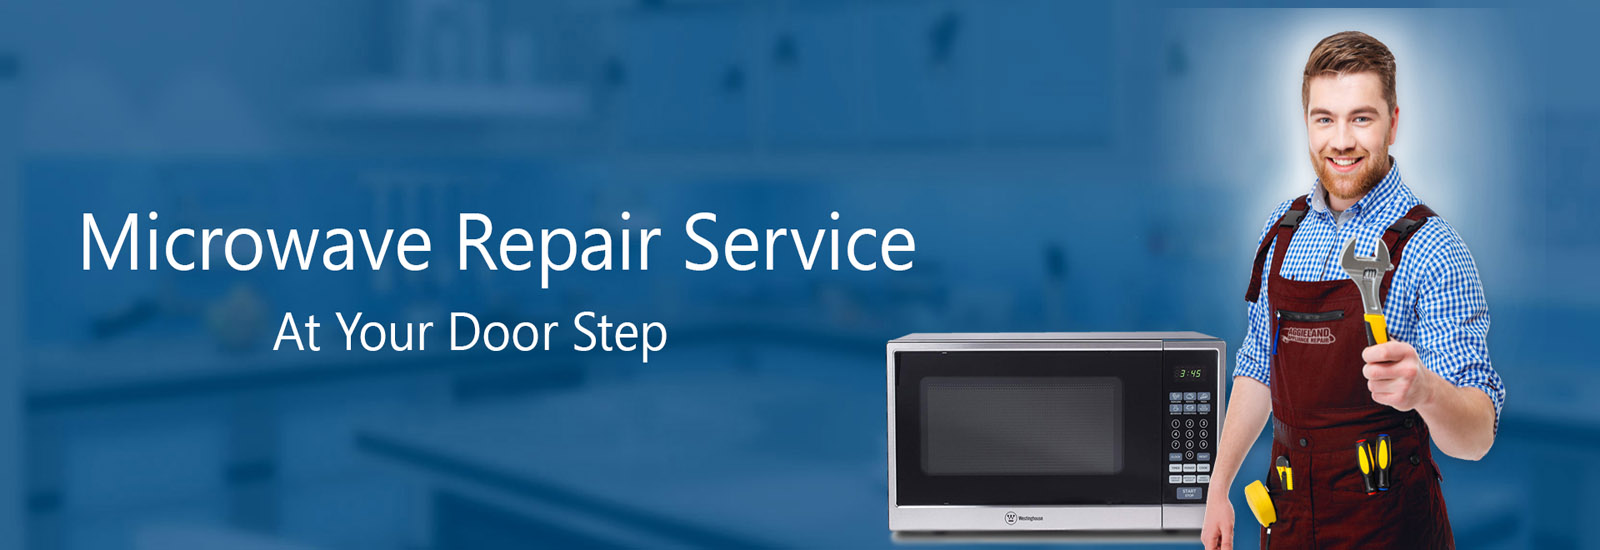 Microwave Oven Repair Service @7065012902- Mannubhai.com